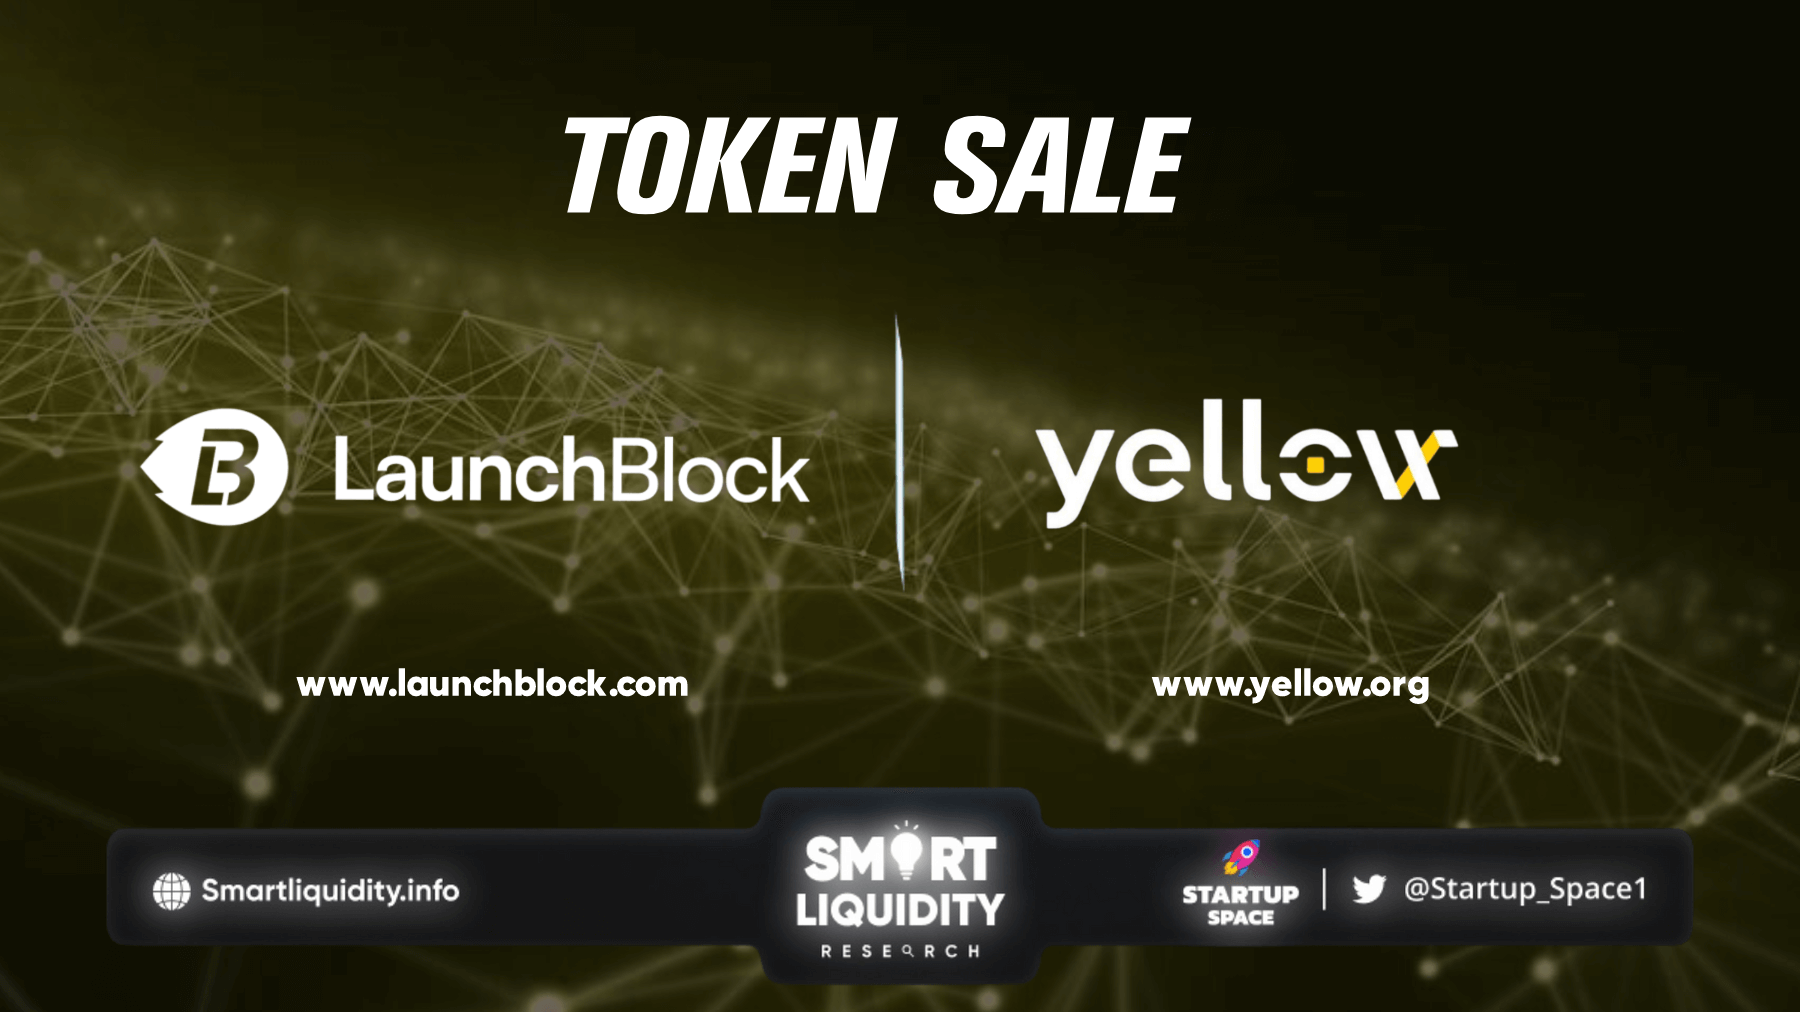 Yellow Network’s Token Sale on LaunchBlock